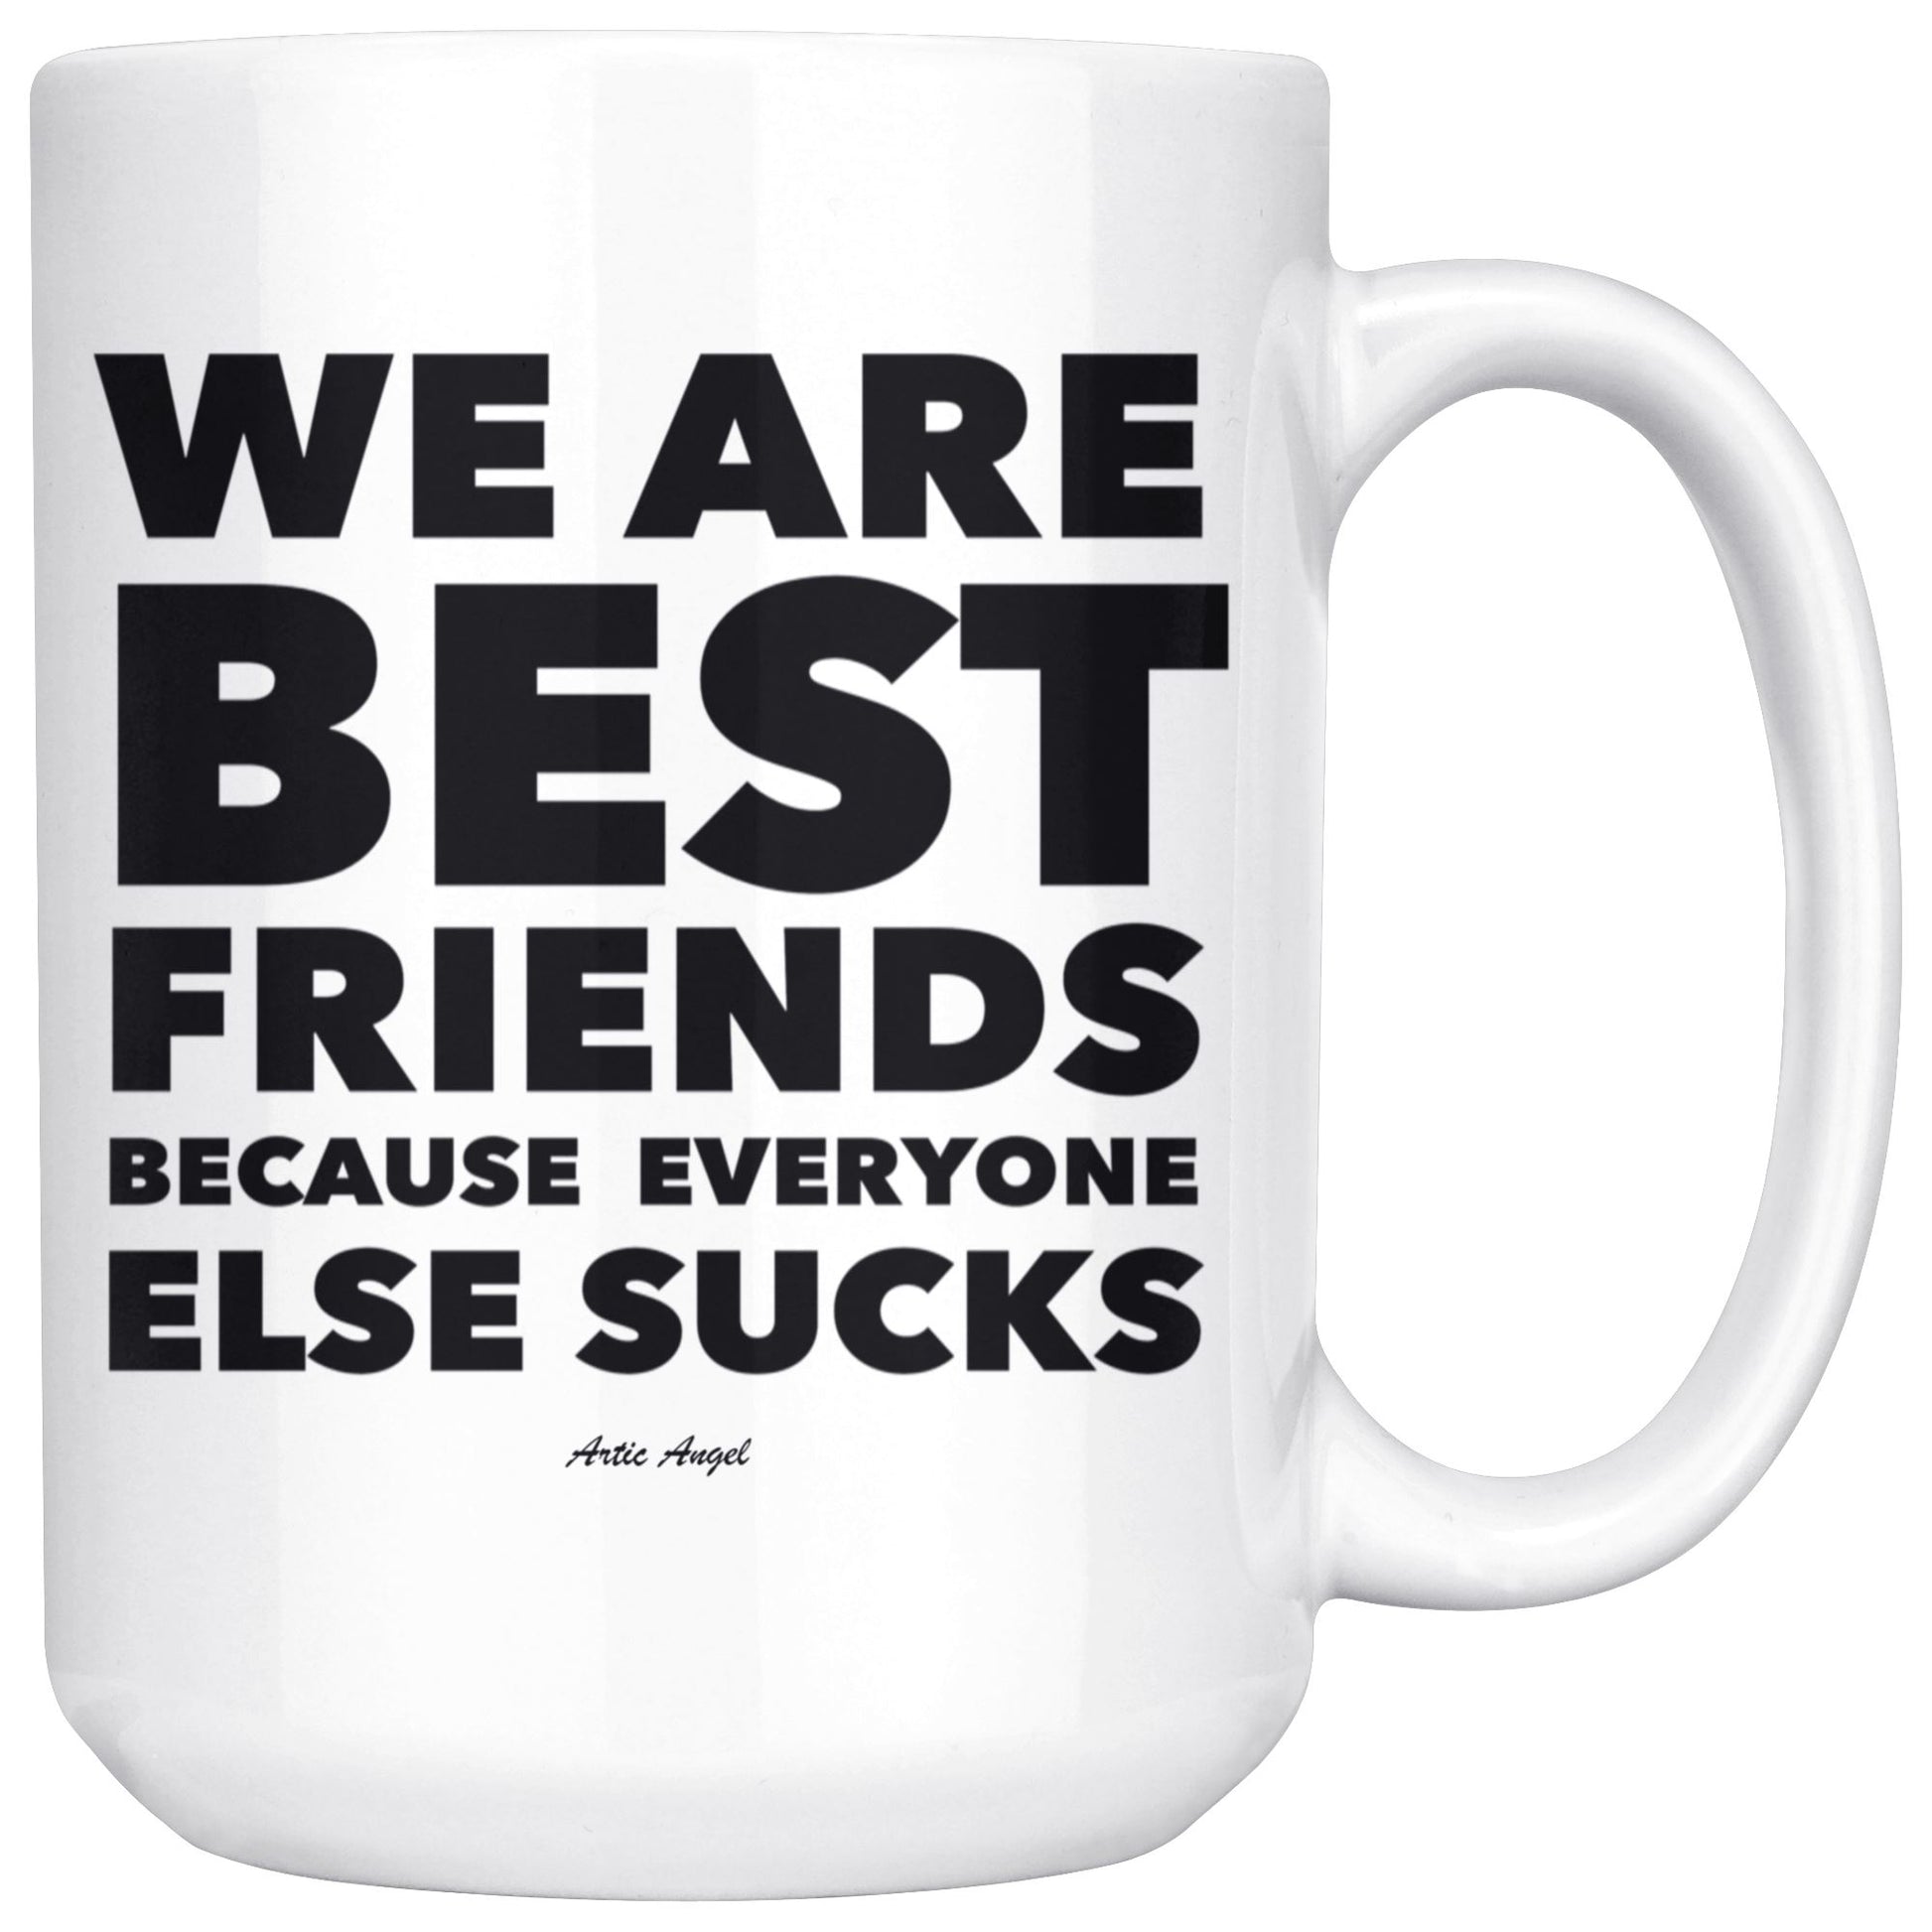 "We Are Best Friends Because Everyone Else Sucks" - Coffee Mug Drinkware White - 15oz 